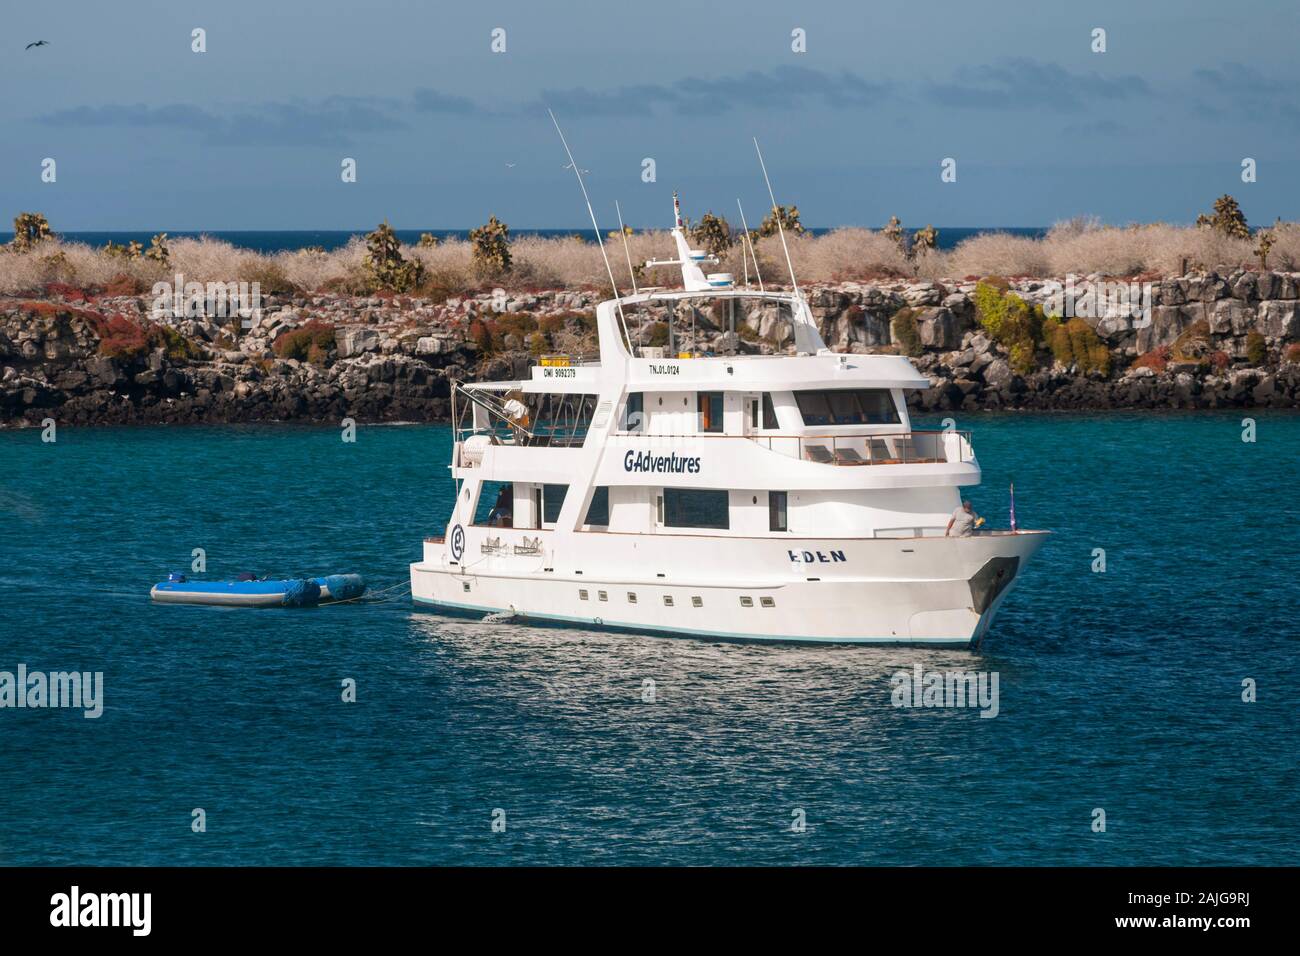 The G-Adventures boat “Eden” anchored off the coast of South Plaza island, in Galapagos, Ecuador. Stock Photo